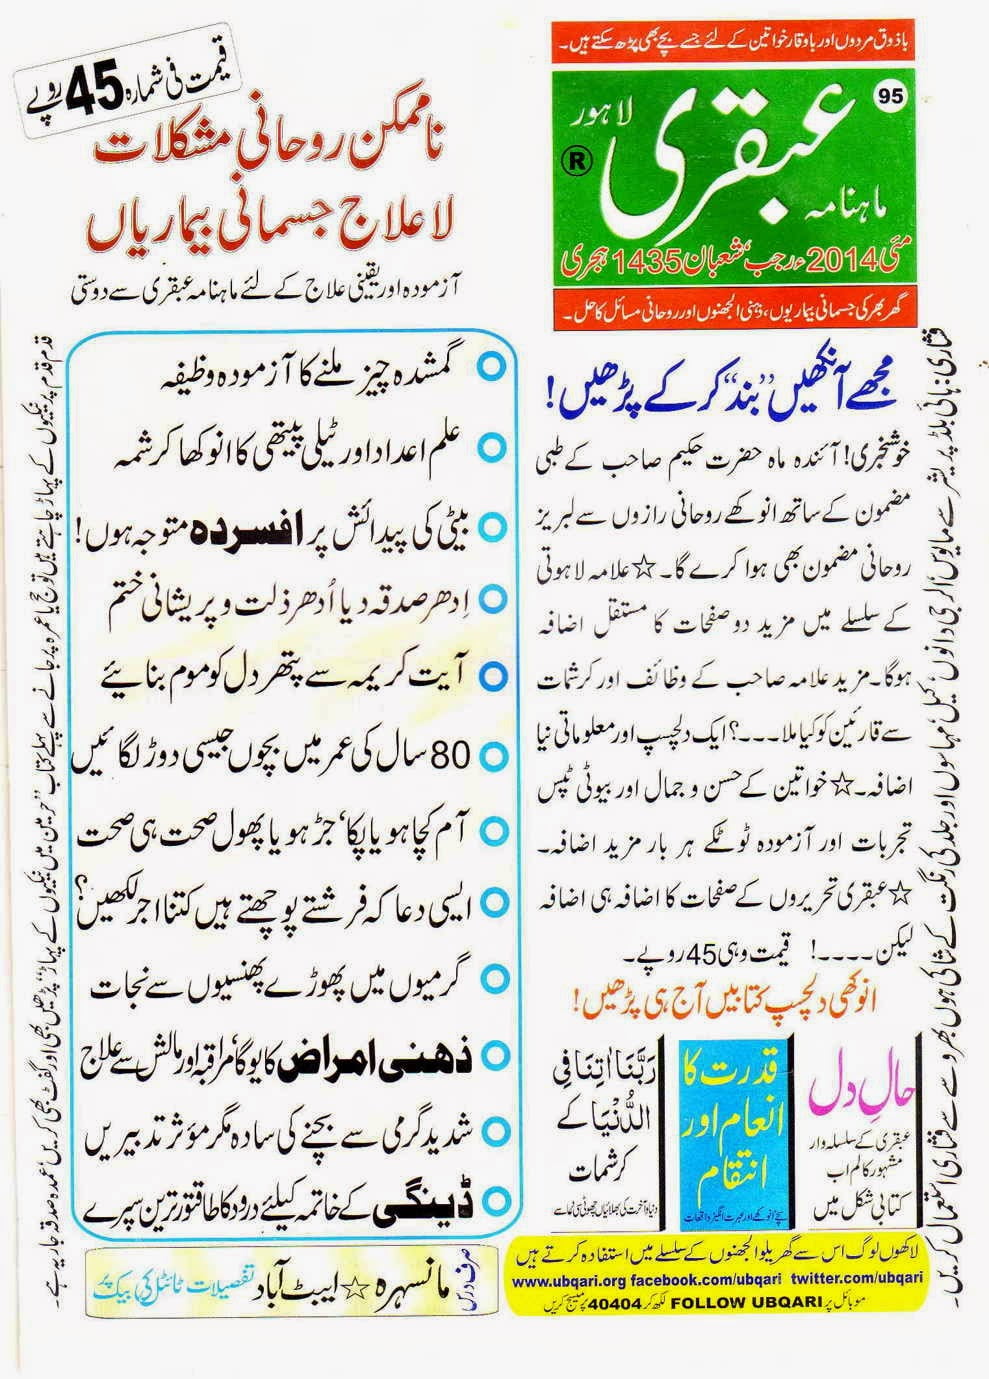 Ubqari Magazine May 2014.Pdf Free Download & Read Online